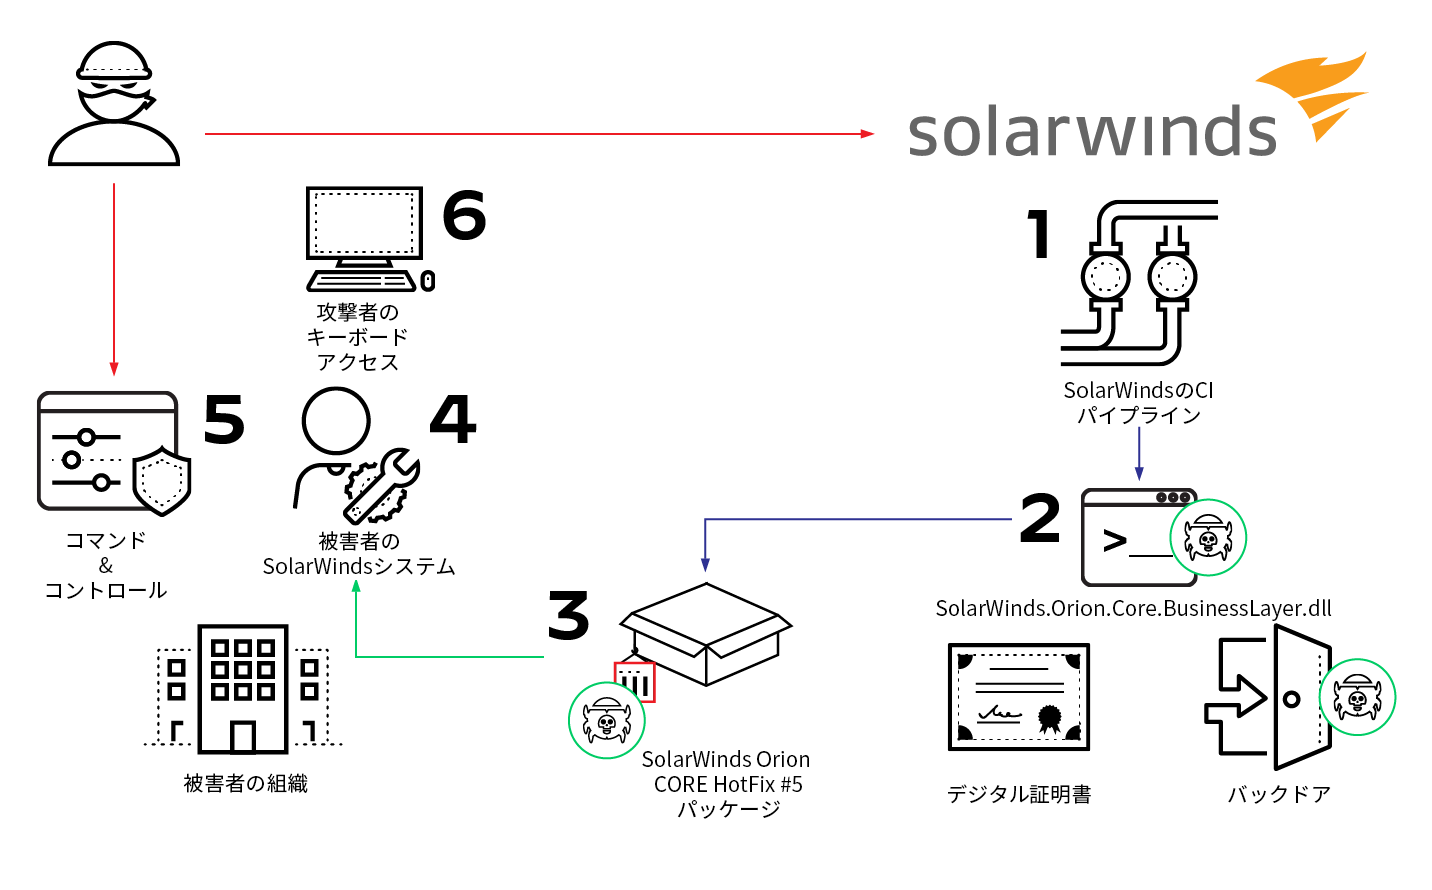 SolarWinds Orionに対する攻撃経路1)SolarWindsのCIパイプライン 2)SolarWinds.Orion.Core.BusinessLayer.dll、デジタル証明書、バックドア 3)SolarWinds Orion COREホットフィックス#5パッケージ 4)被害者のSolarWindsシステム 5)コマンド&コントロール 6)攻撃者のキーボードアクセス 